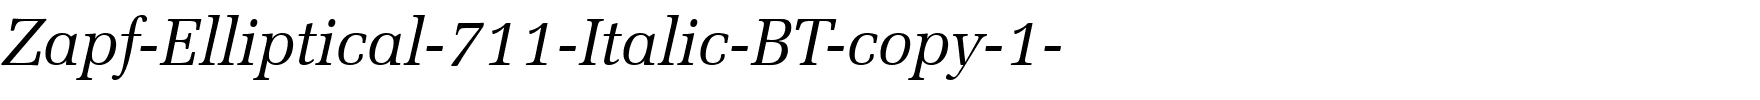 Zapf-Elliptical-711-Italic-BT-copy-1-